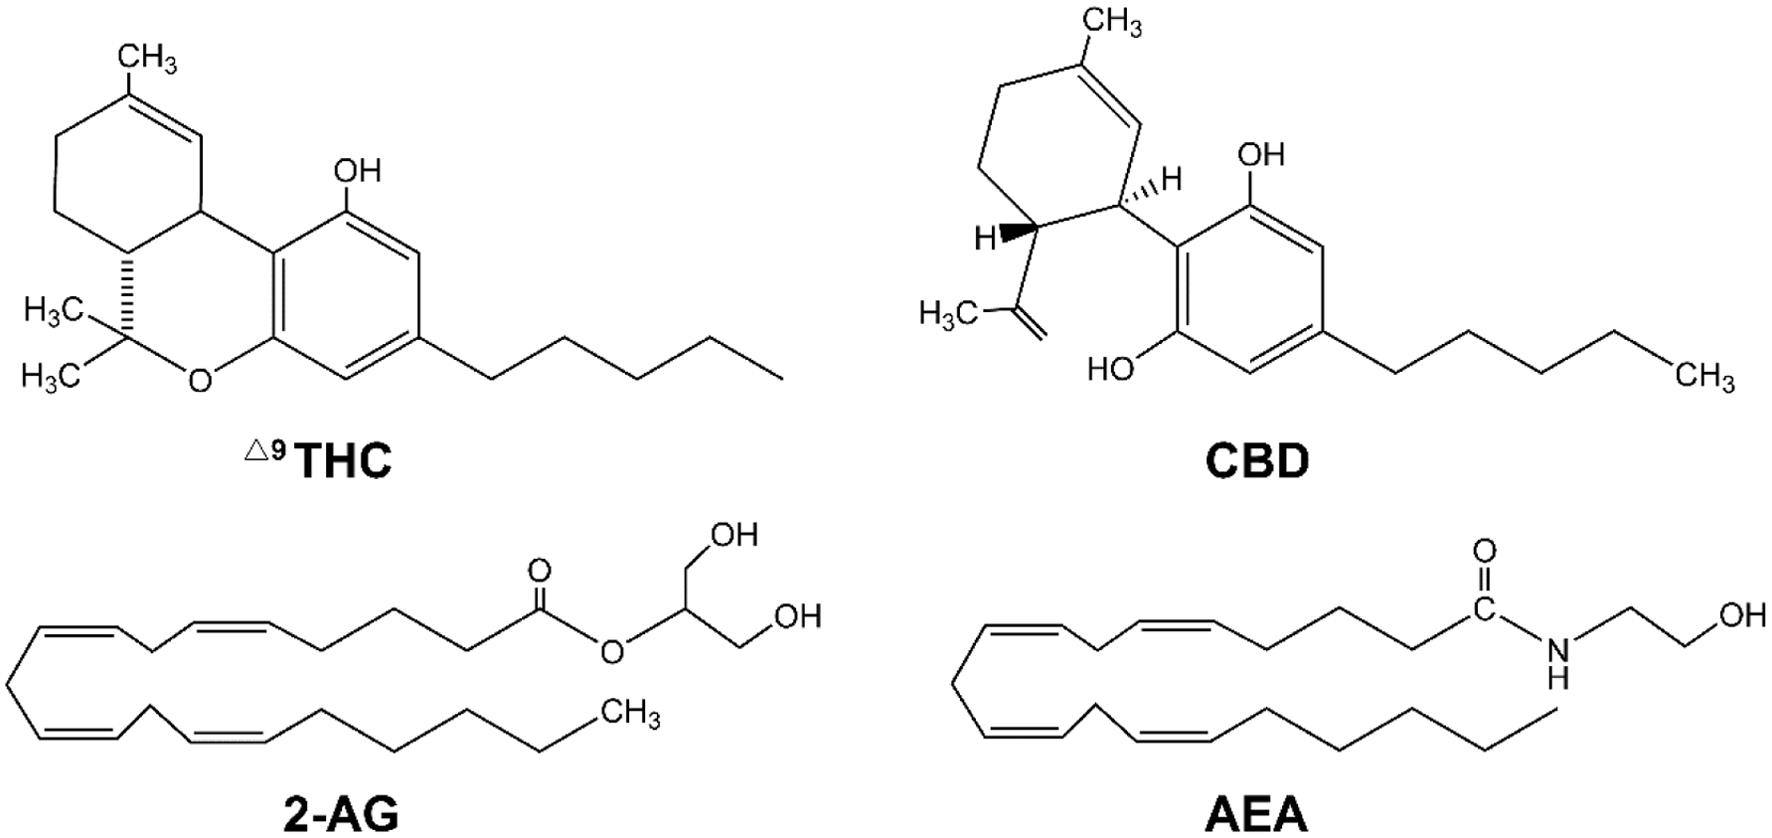 Lipophilic structures for delta-9-tetrahydrocannabinol (<sup>Δ9</sup>THC) and cannabidiol (CBD) as well as the endocannabinoids 2-arachidonoylglycerol (2-AG) and anandamide (AEA).